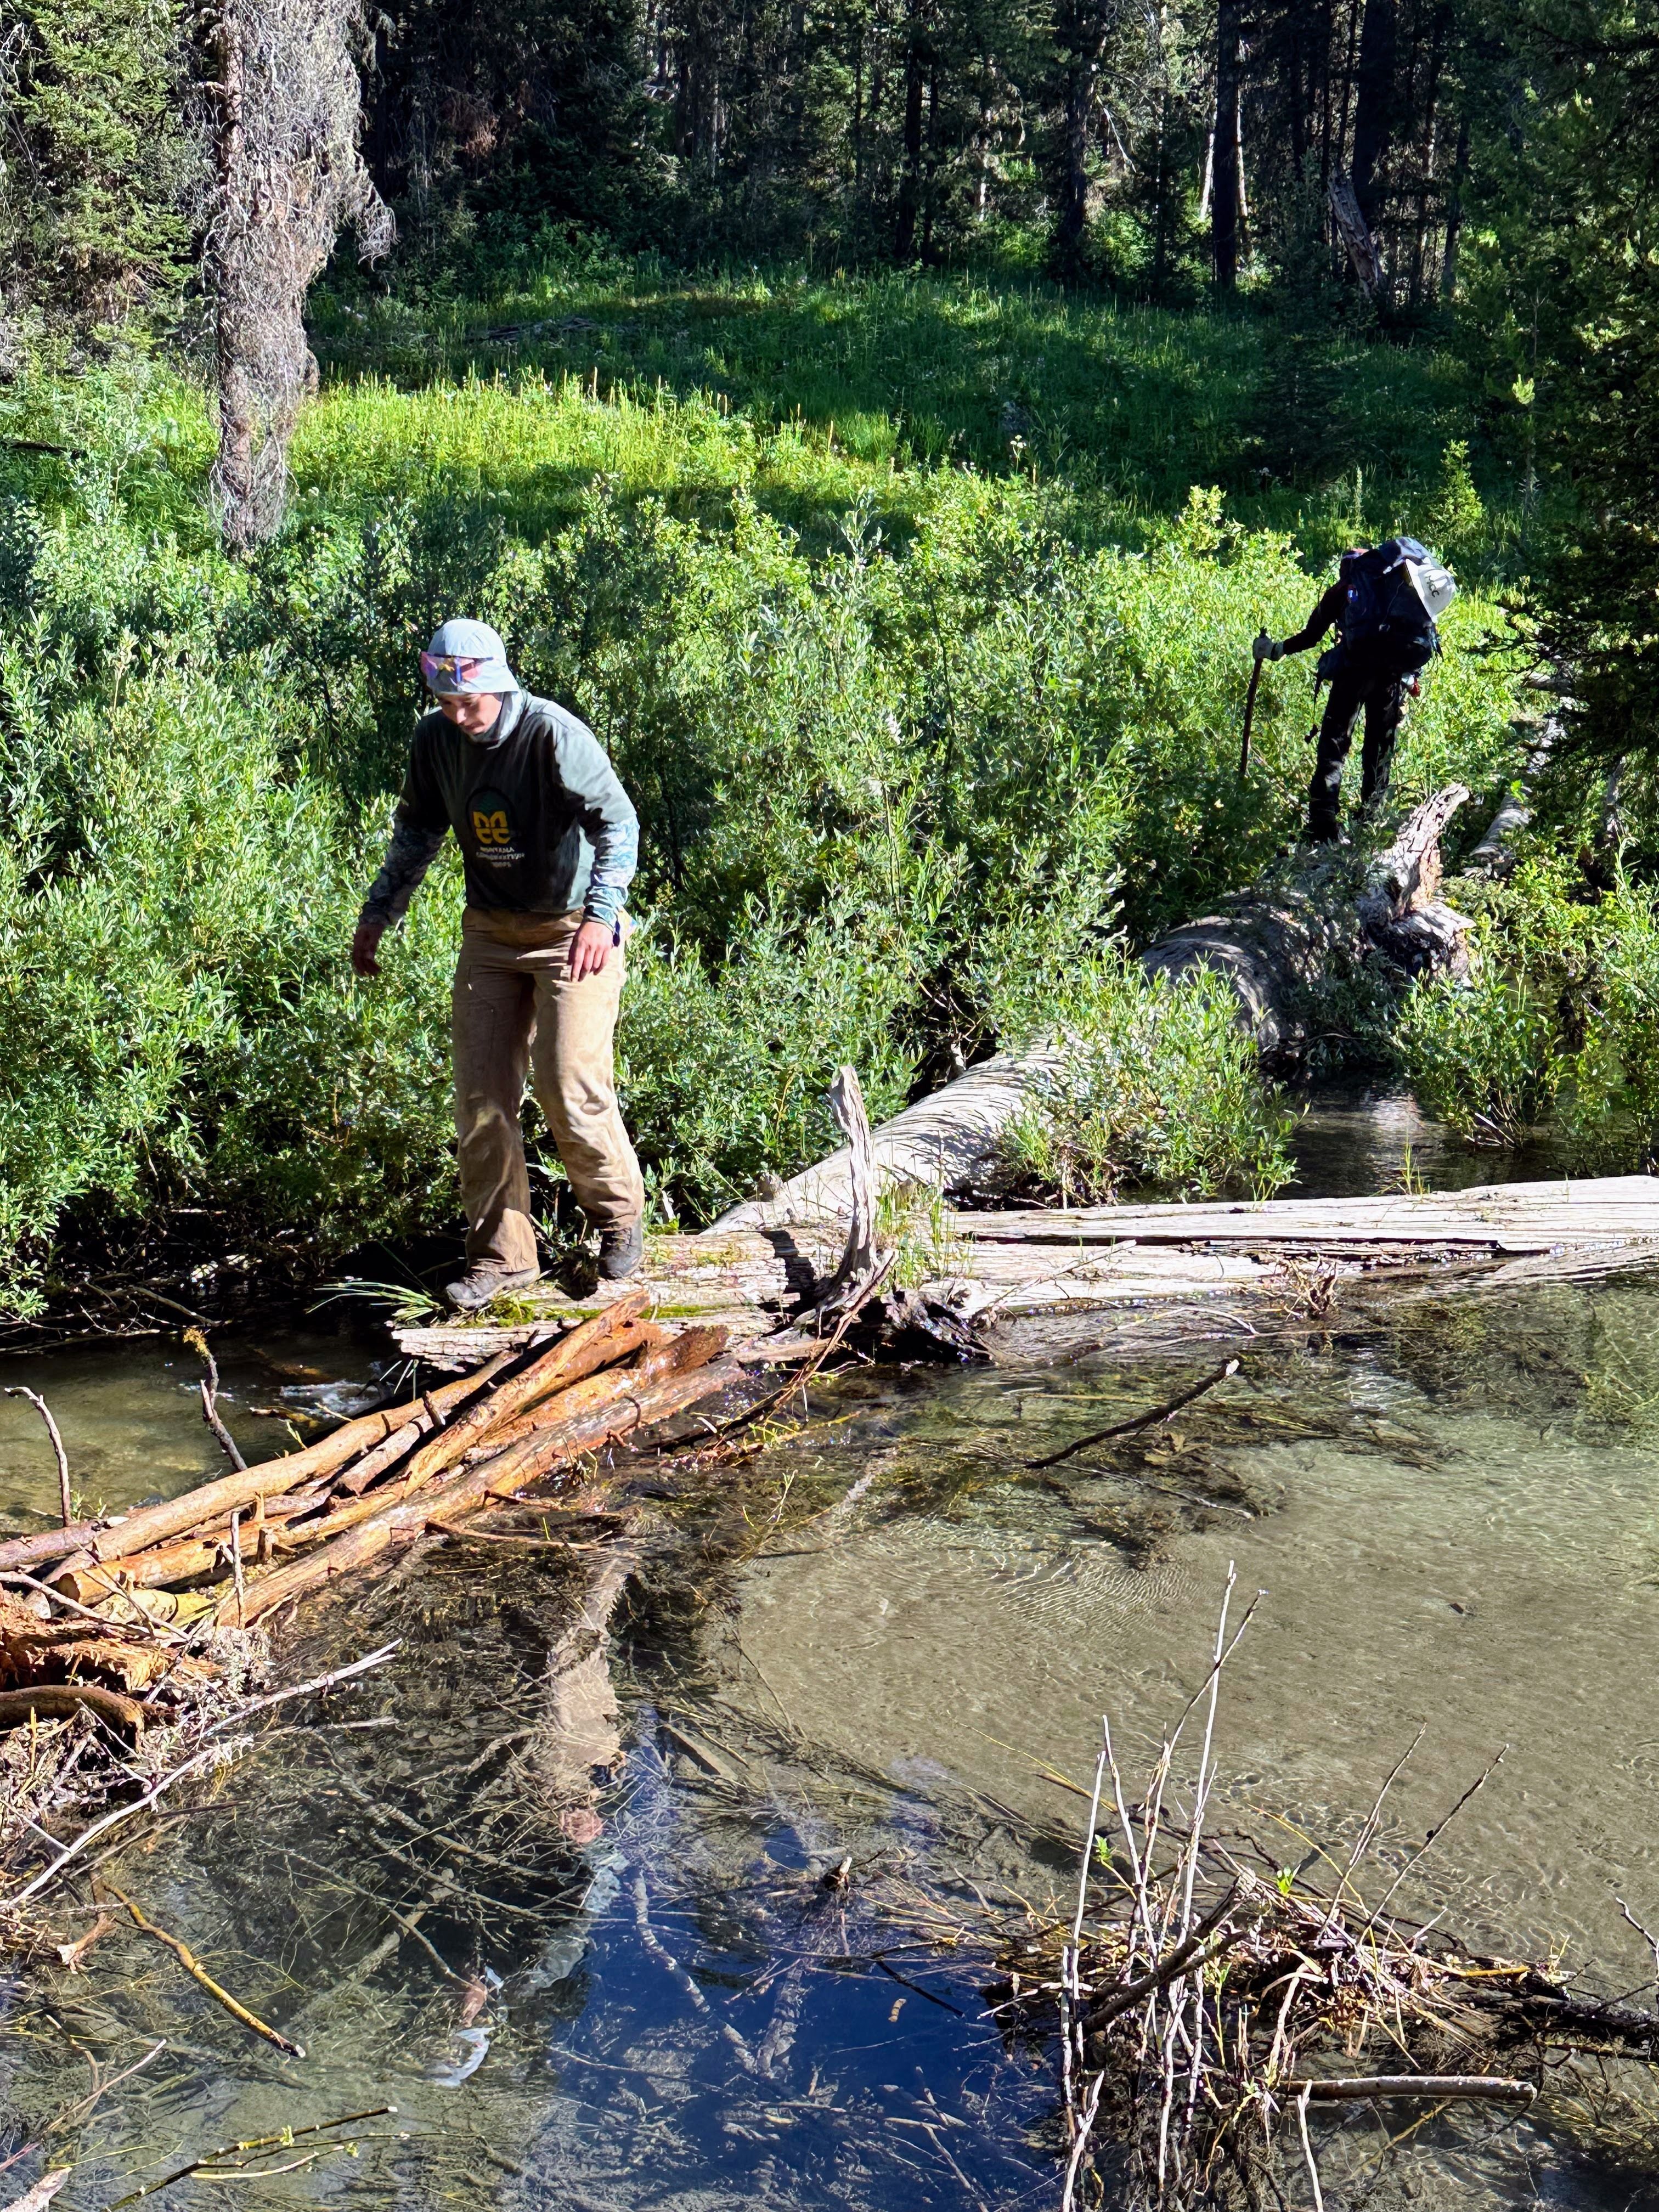 Crew members balance on a log to cross a river